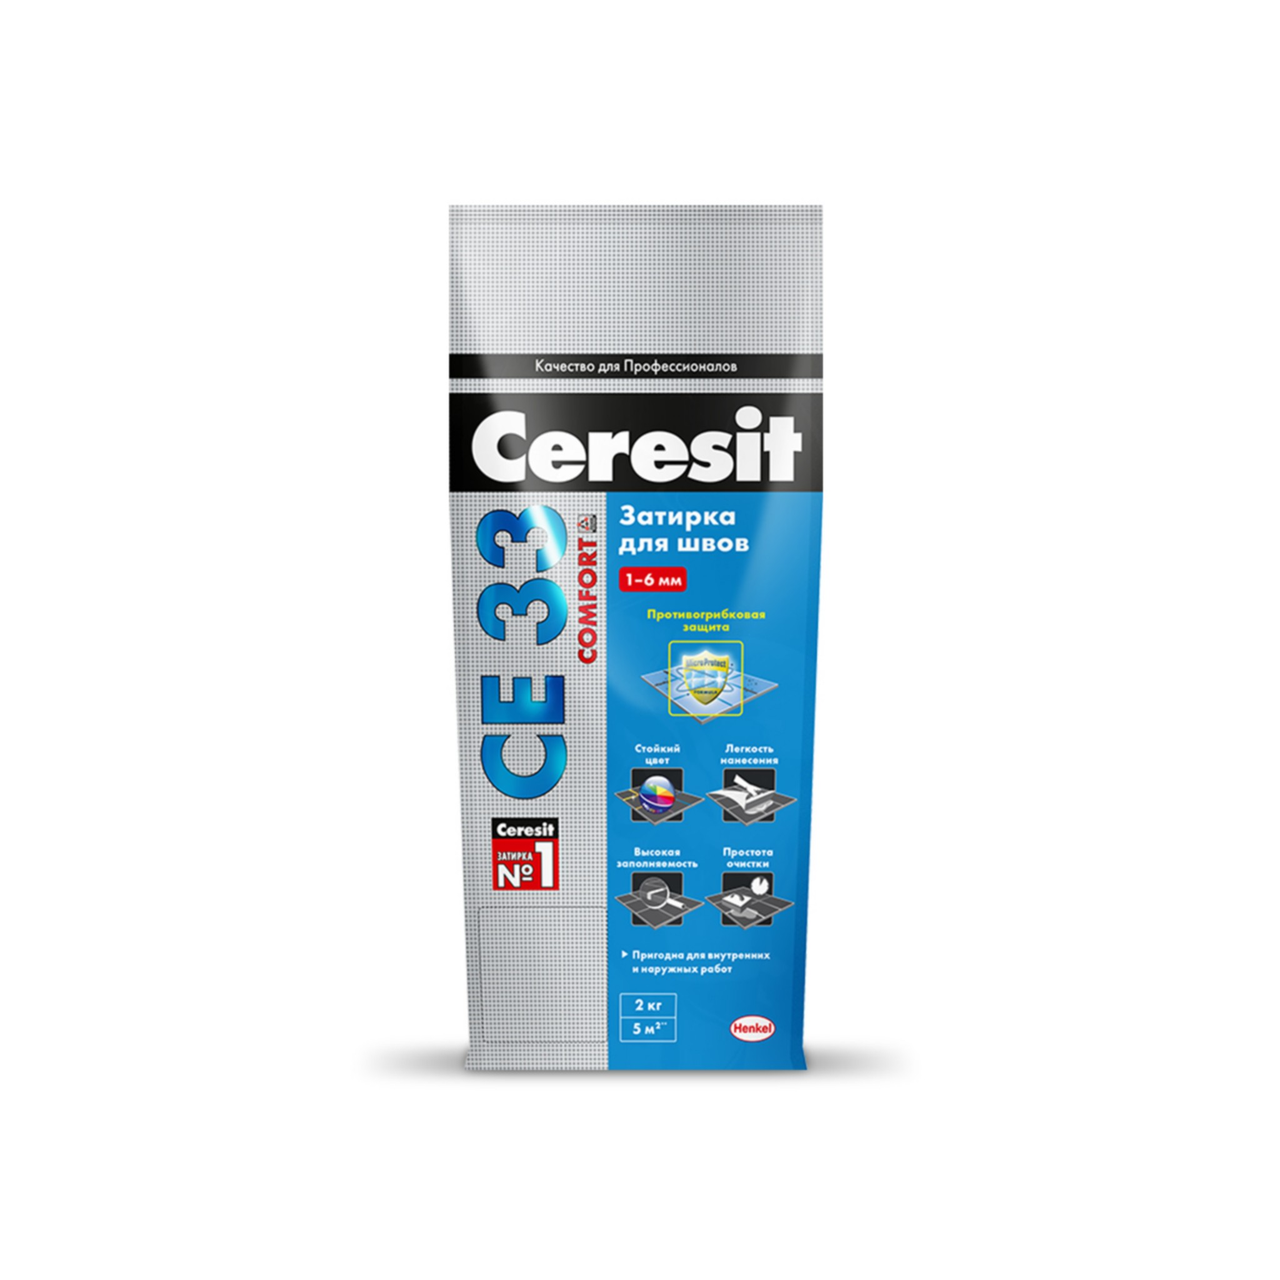 Ceresit  CE 33 Comfort затирка для узких швов, цвет: Сахара (Sahara), 2 кг